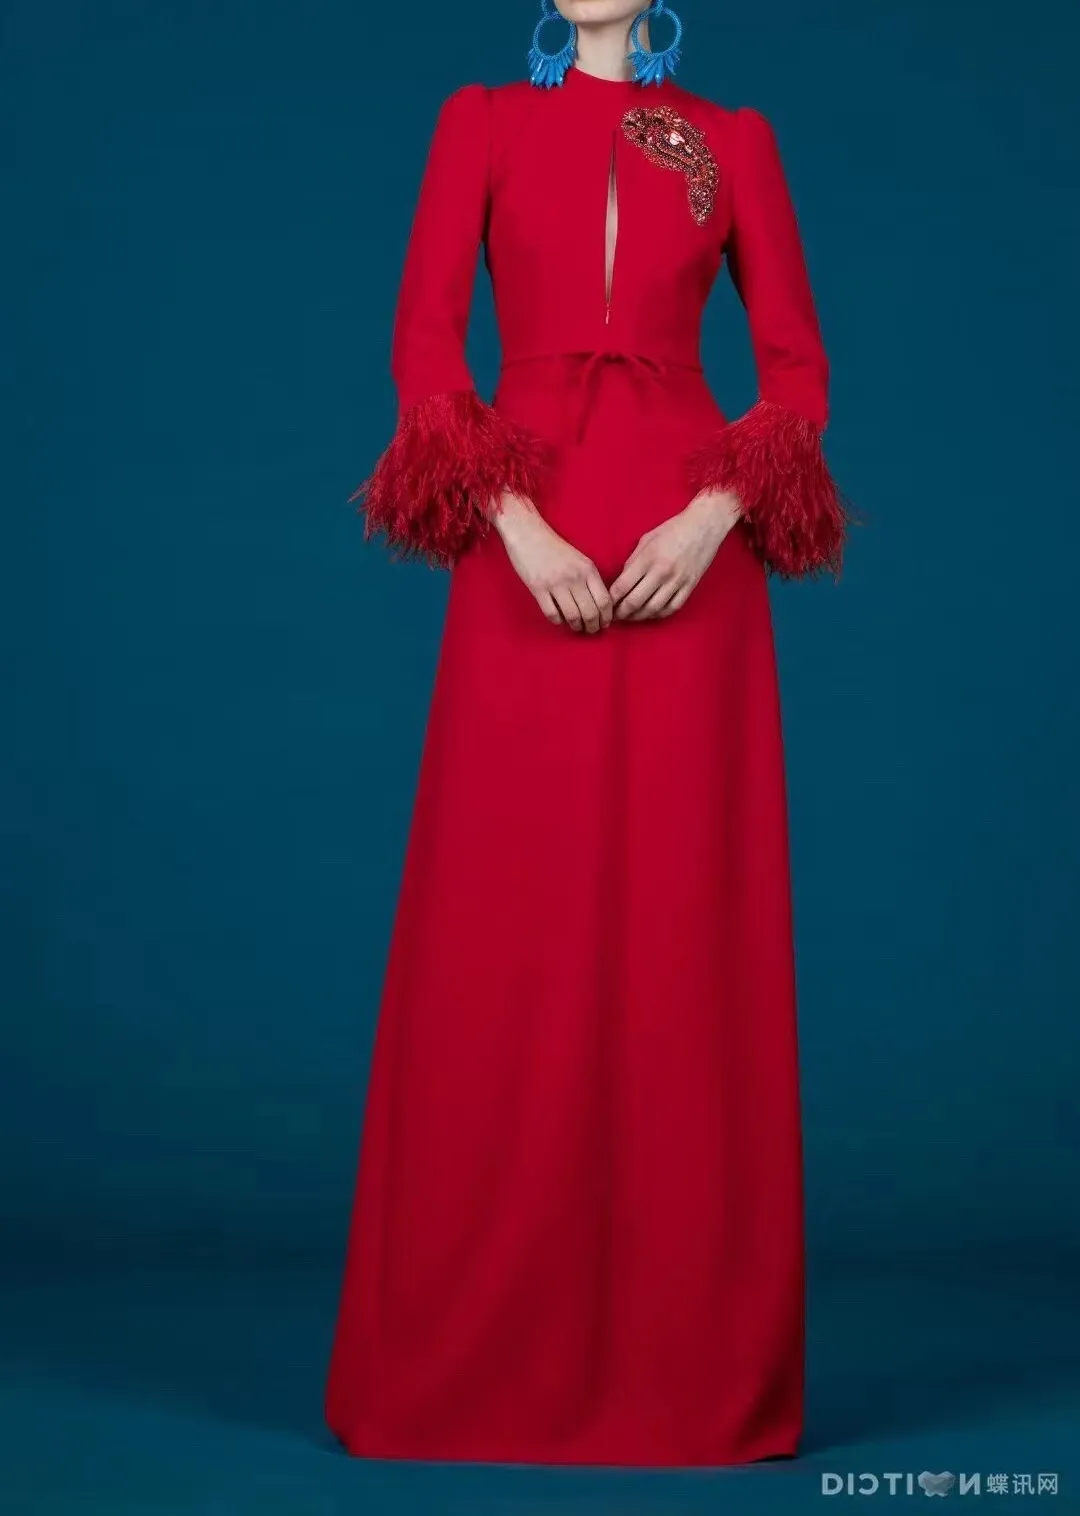 Sukienka designerska stacja europejska 24 sukienka bankietowa w stylu pasa startowego elegancka długa sukienka